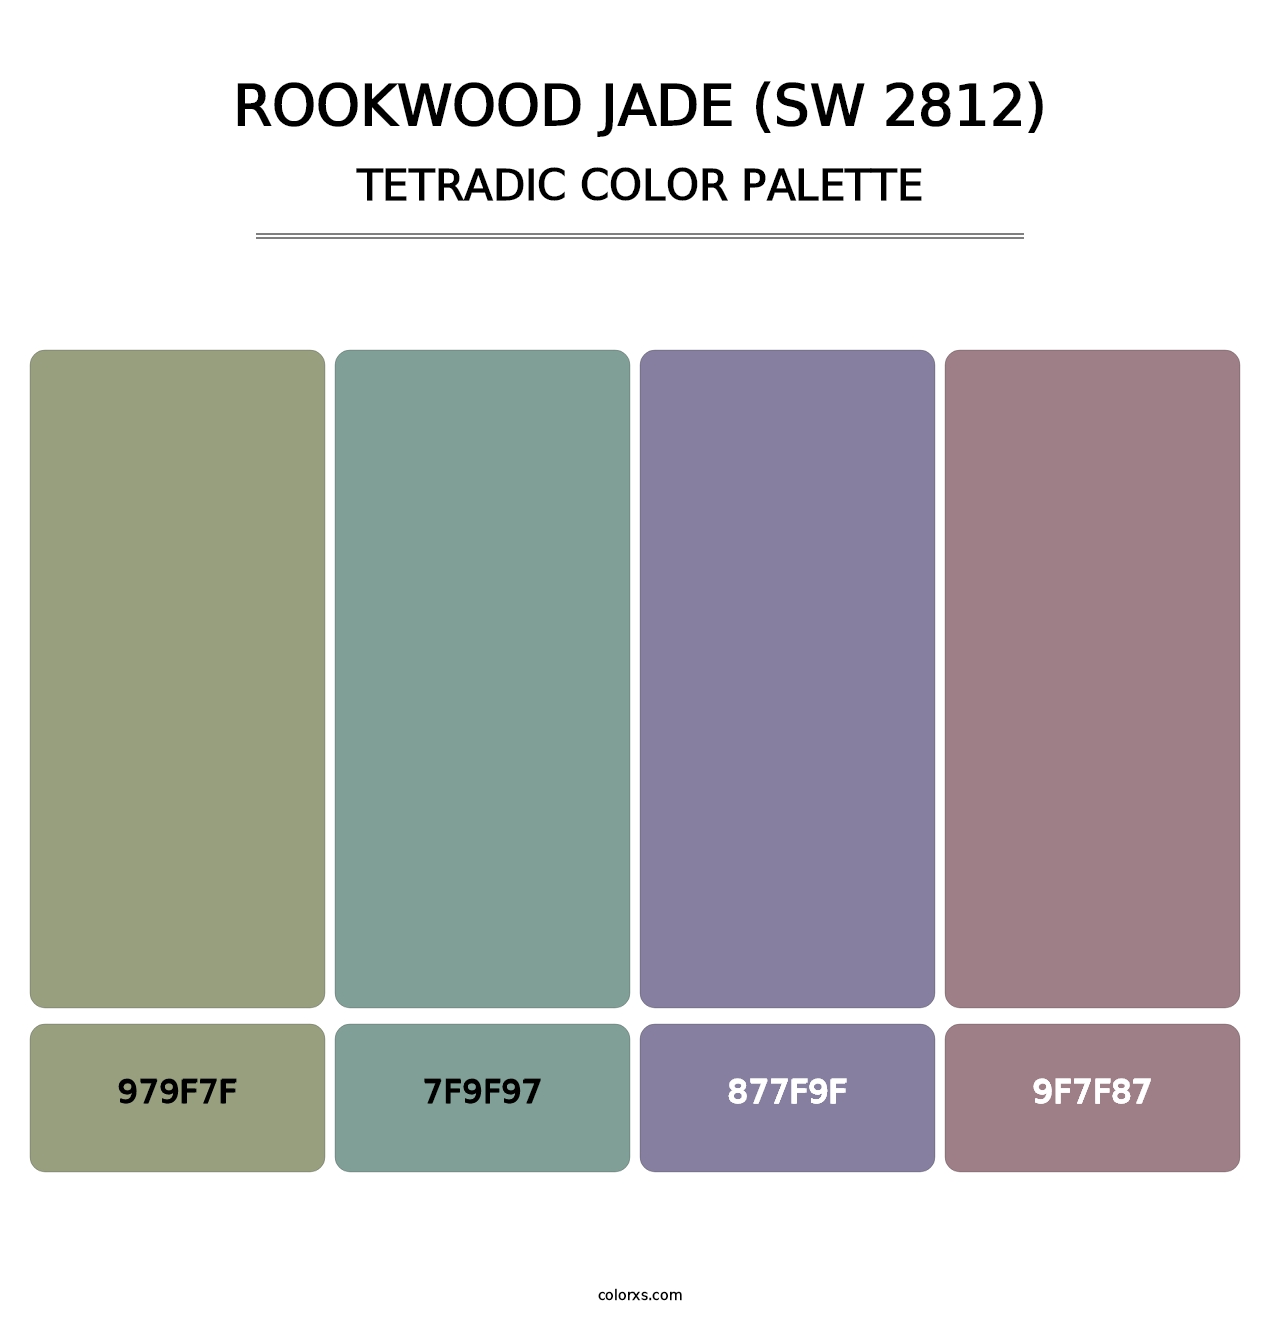 Rookwood Jade (SW 2812) - Tetradic Color Palette